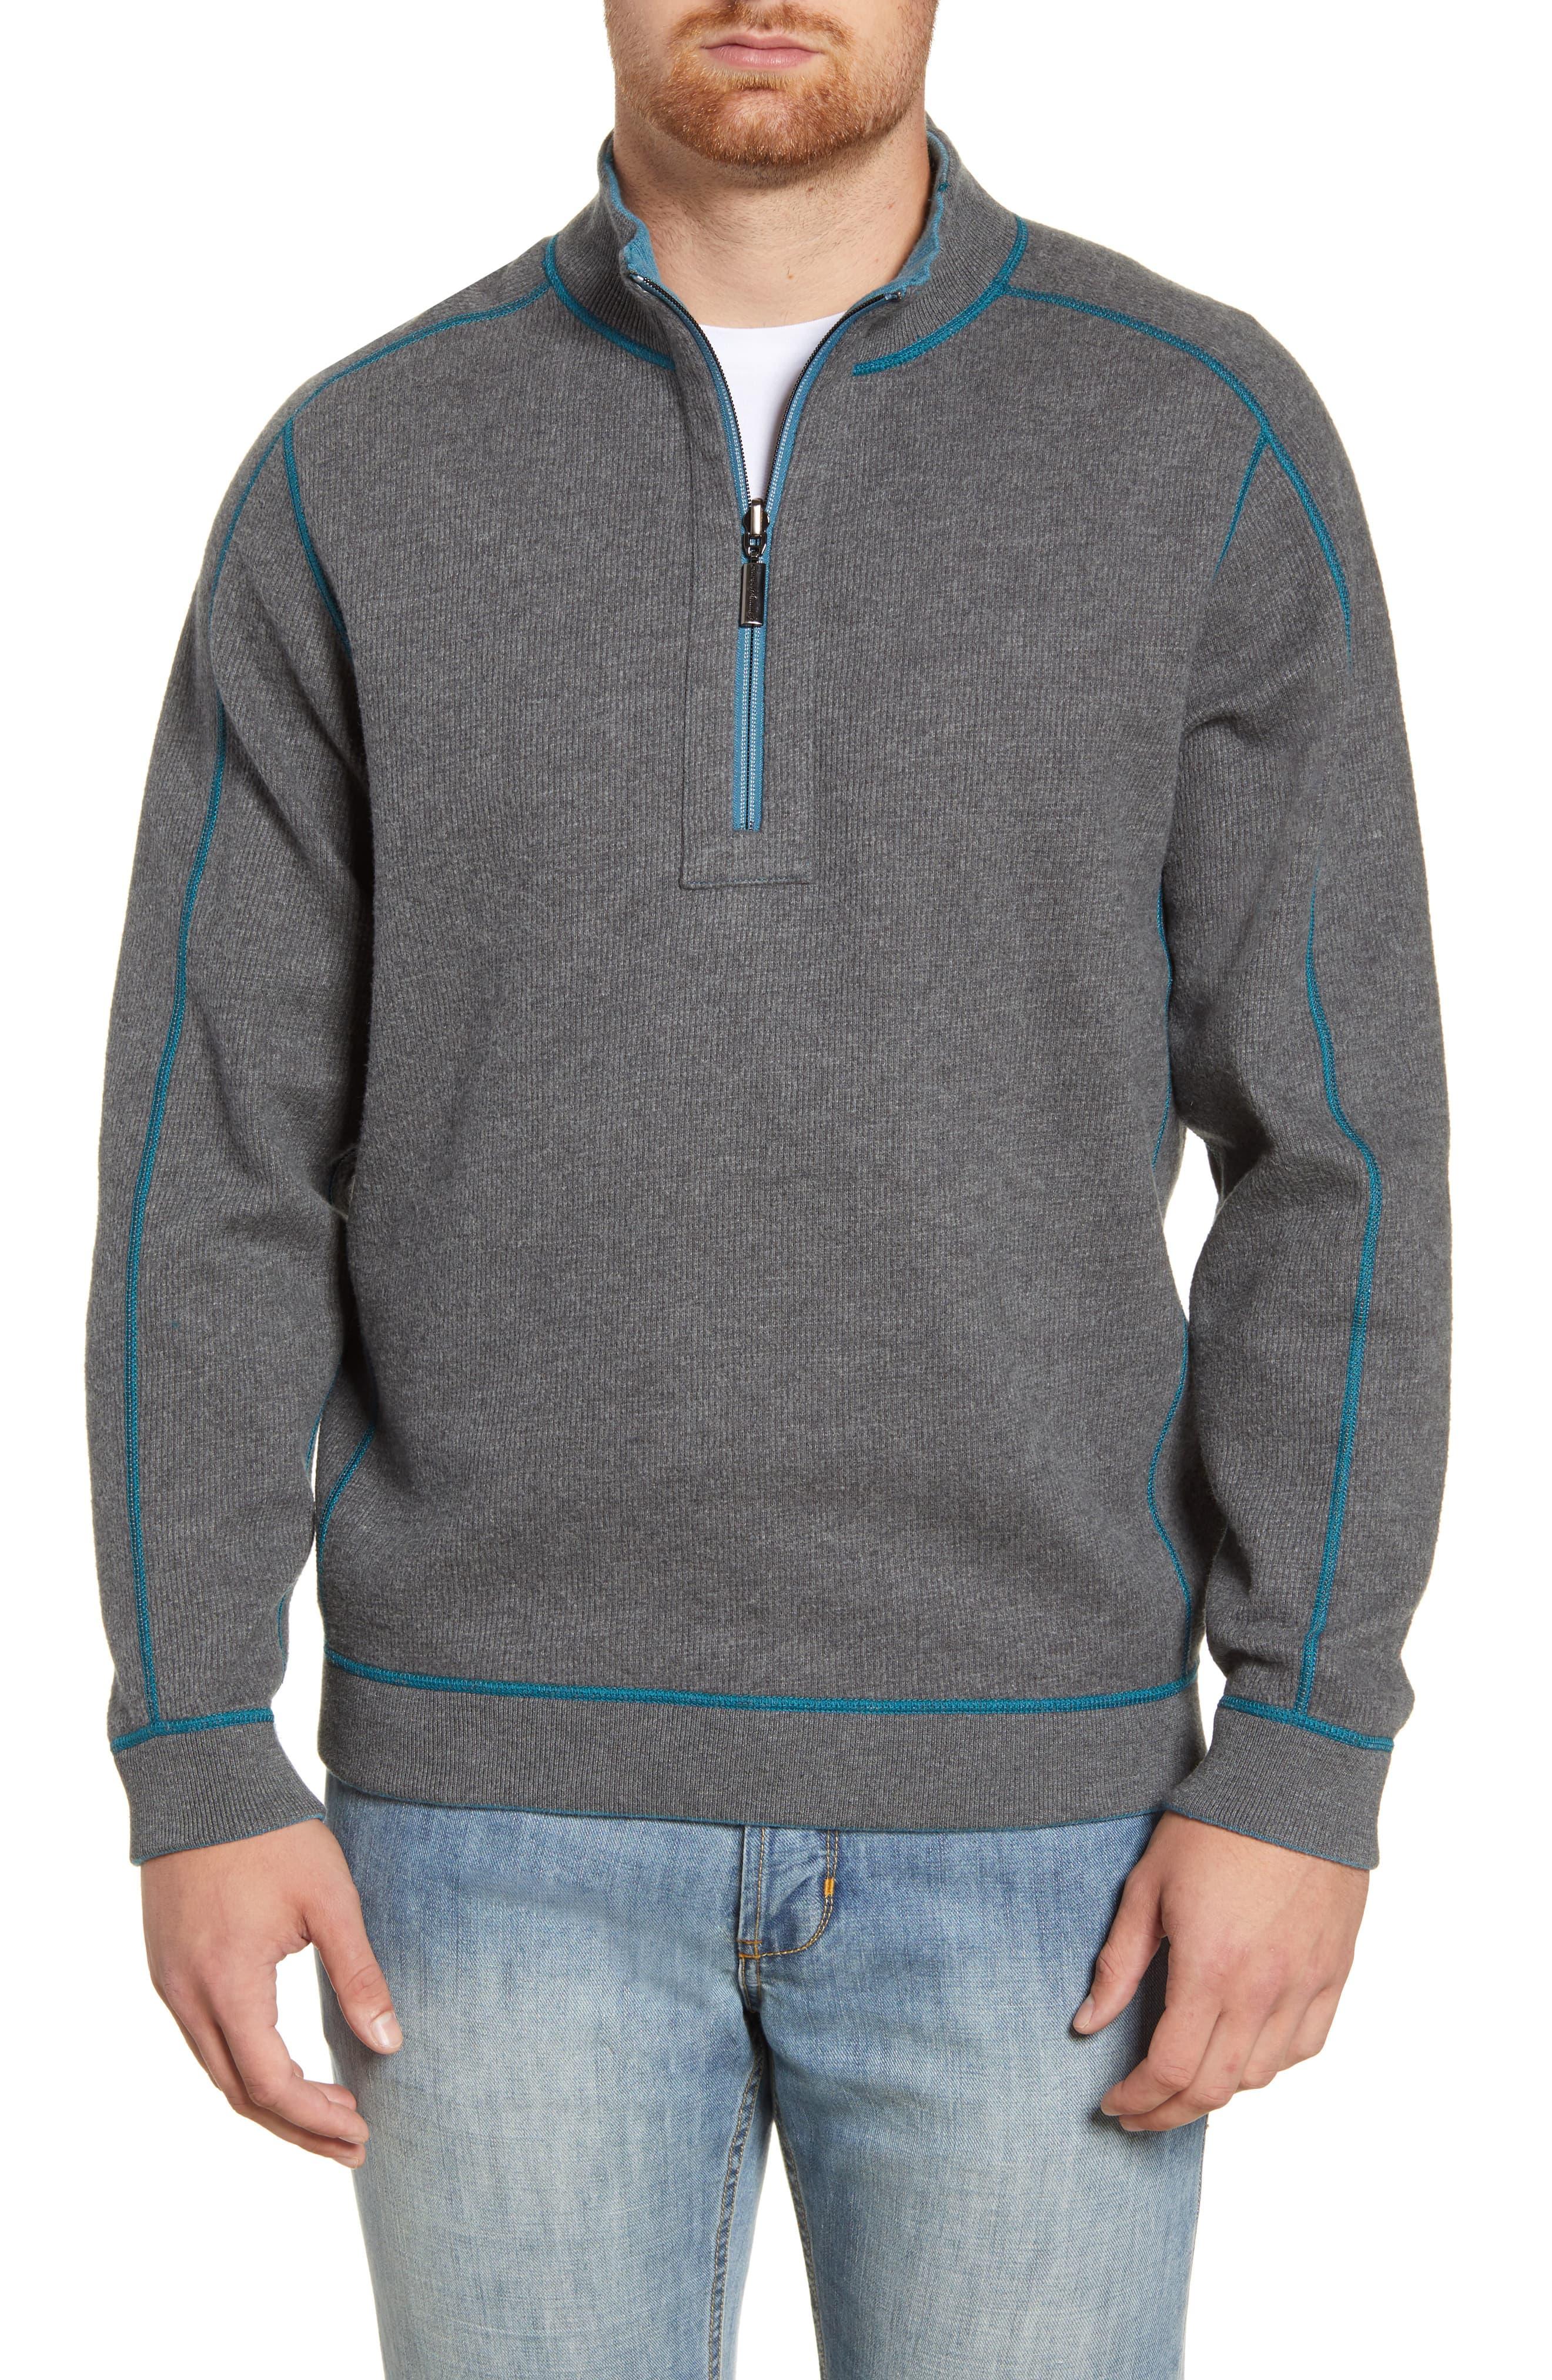 Details about   Tommy Bahama Men's Flipsider Reversible Half-Zip Sweater Blue/Grey XL New 